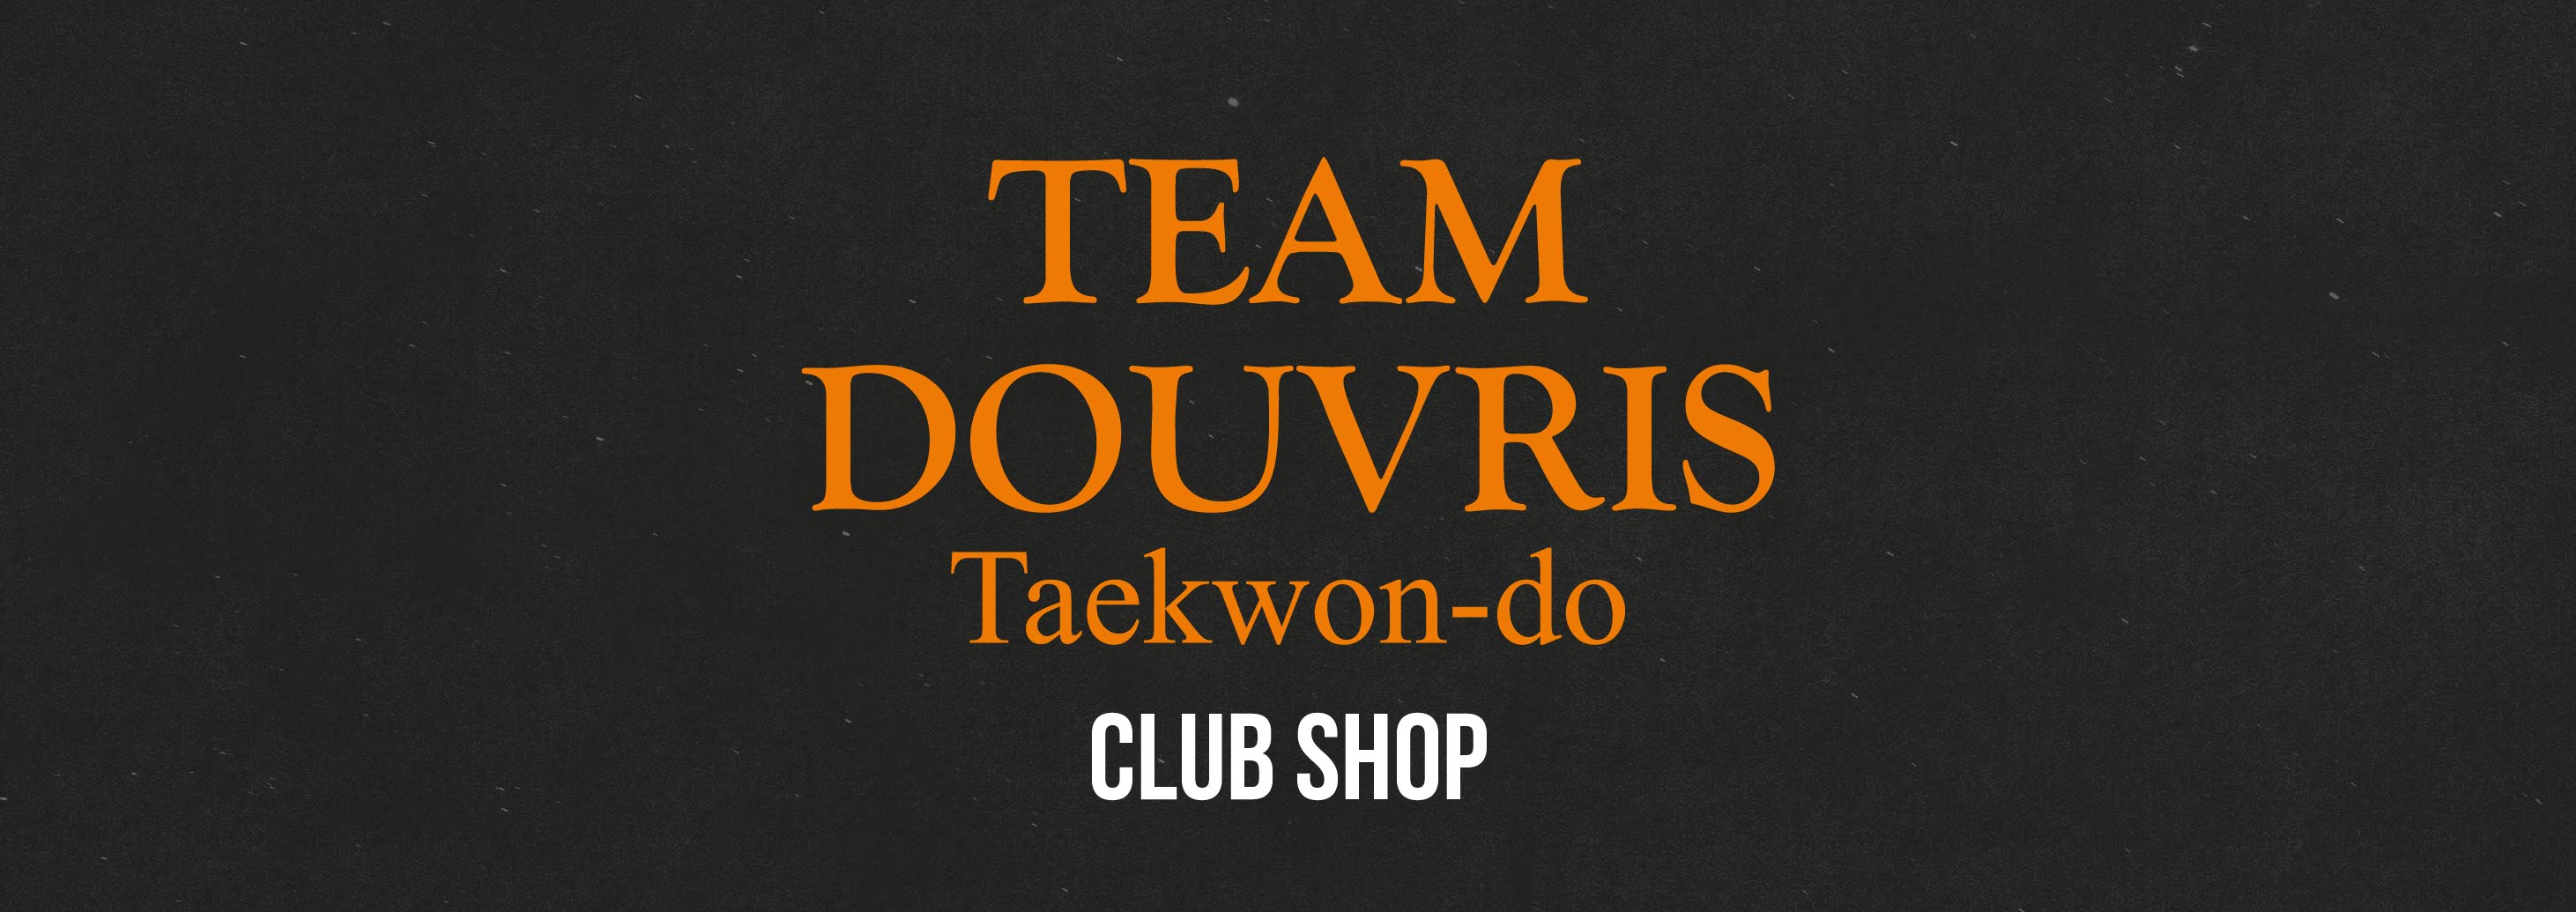 Team Douvris Club Shop